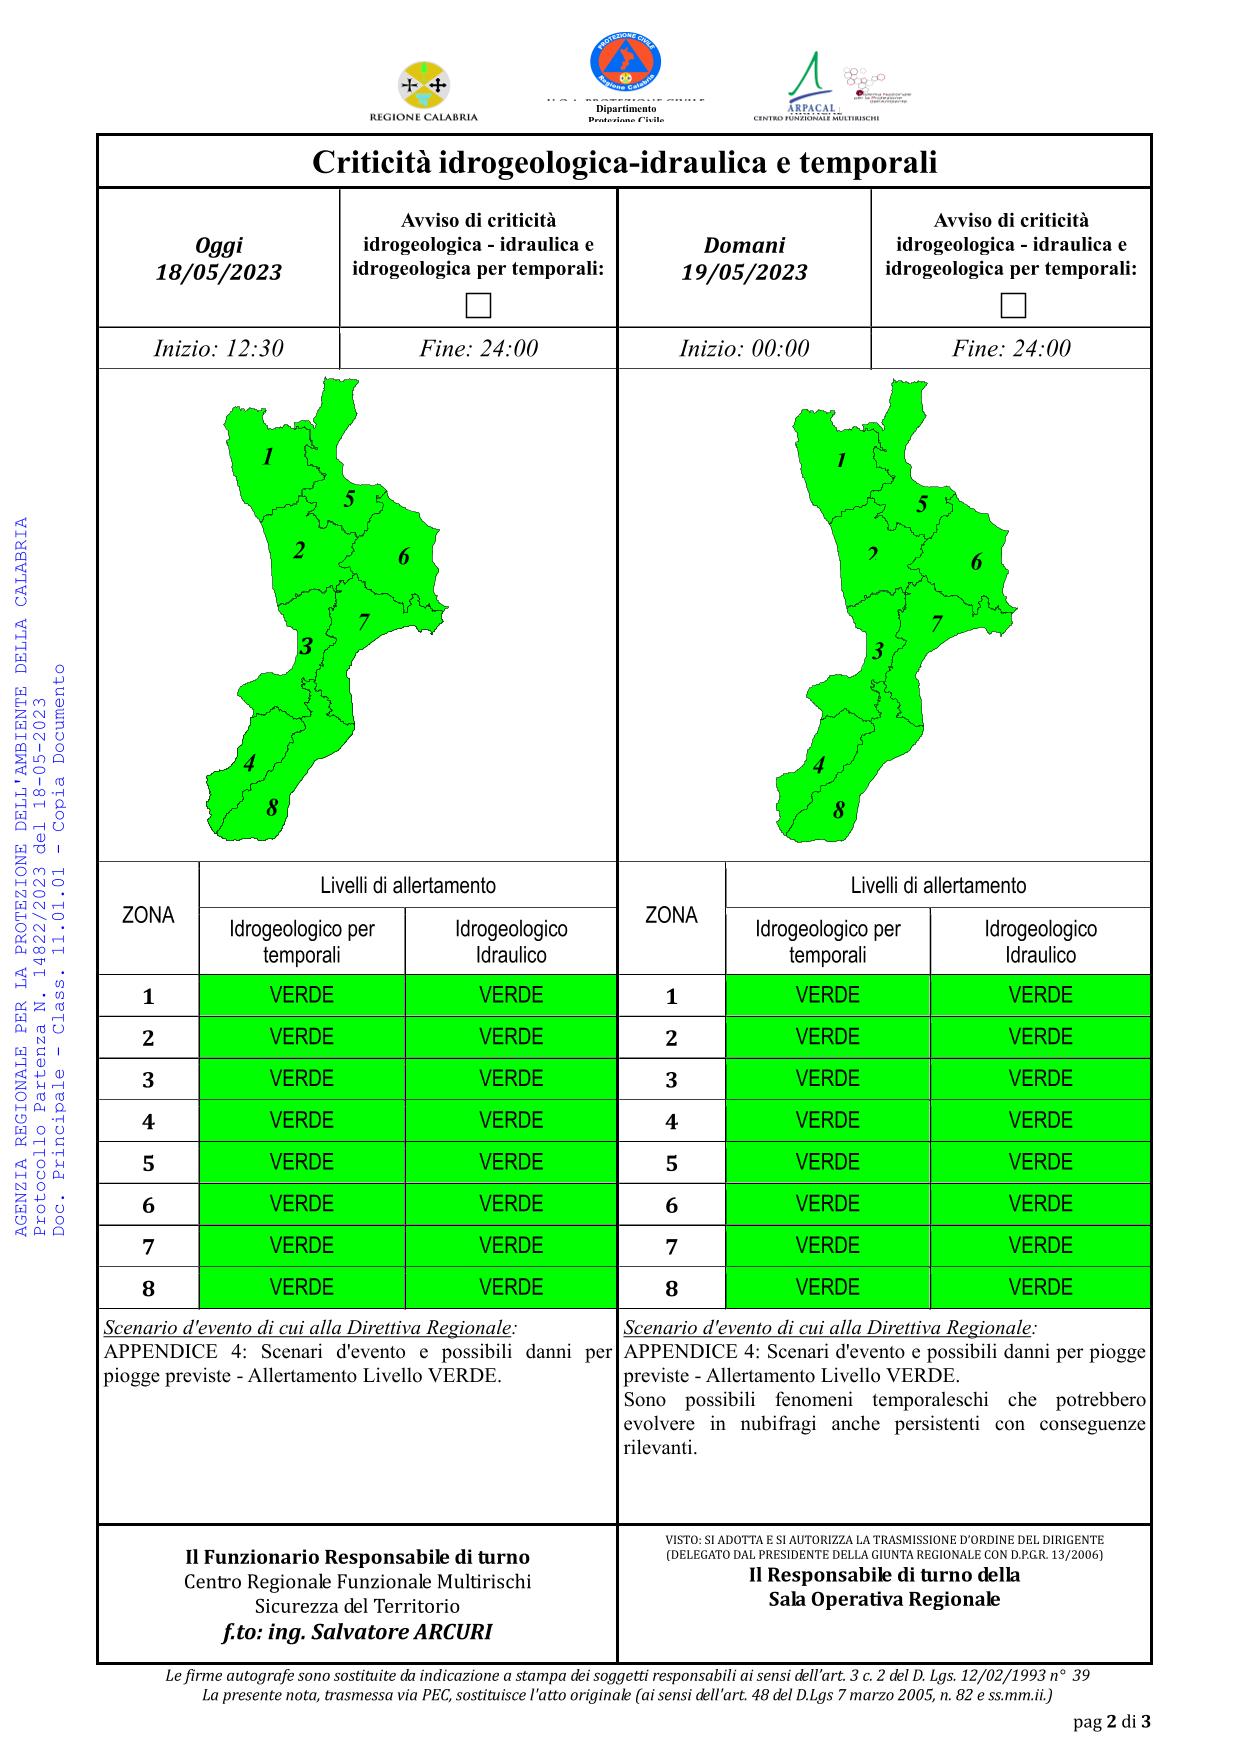 Criticità idrogeologica-idraulica e temporali in Calabria 18-05-2023